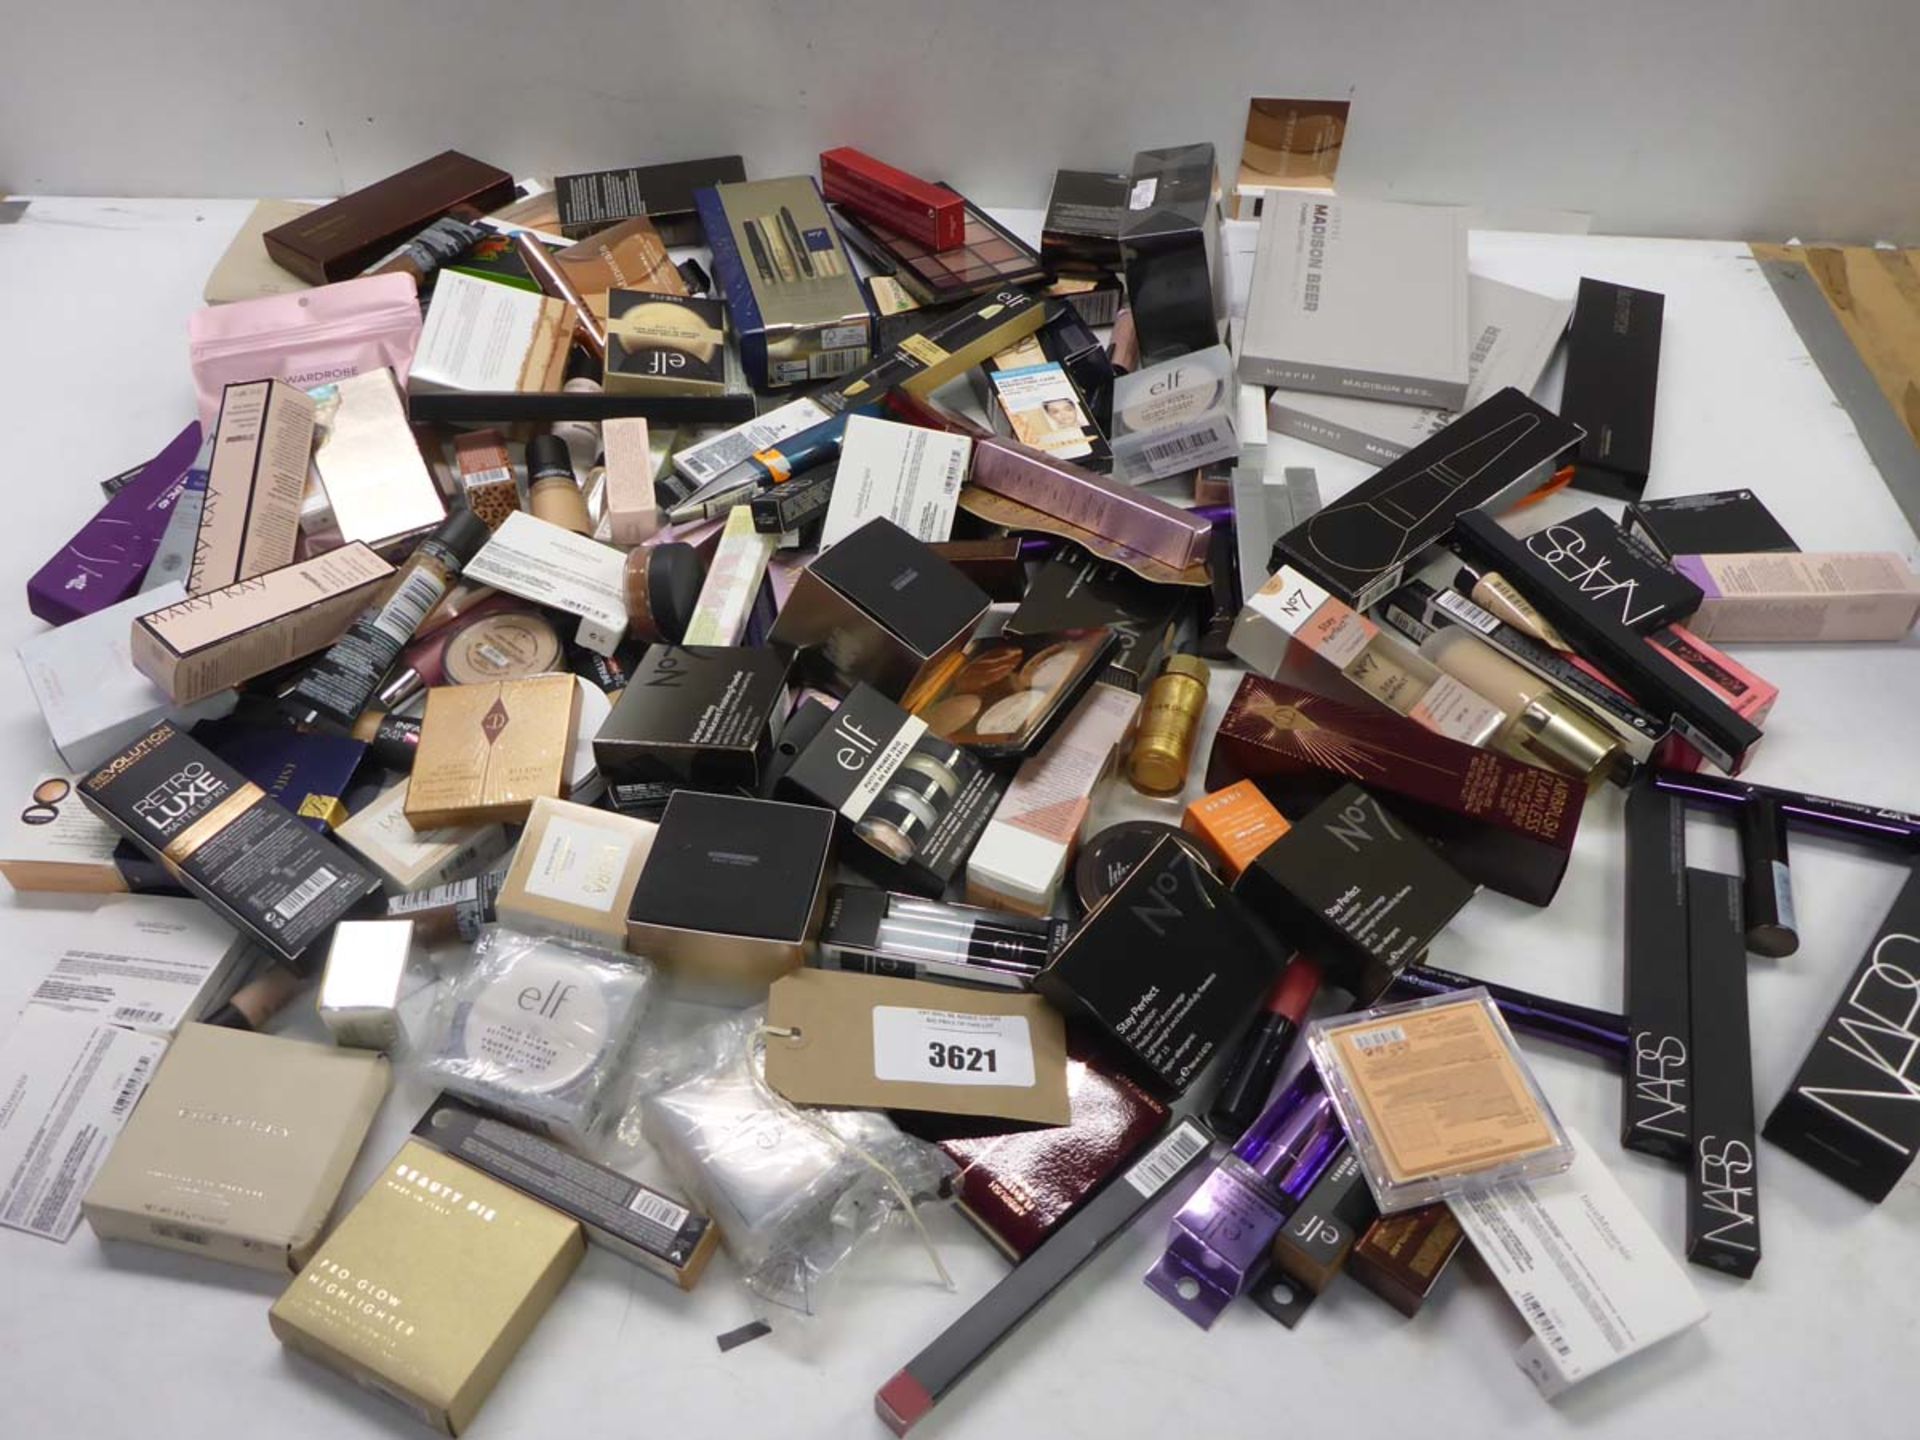 Large assortment of branded cosmetics including Burberry, Charlotte Tilbury, NARS, MAC, Tropic,